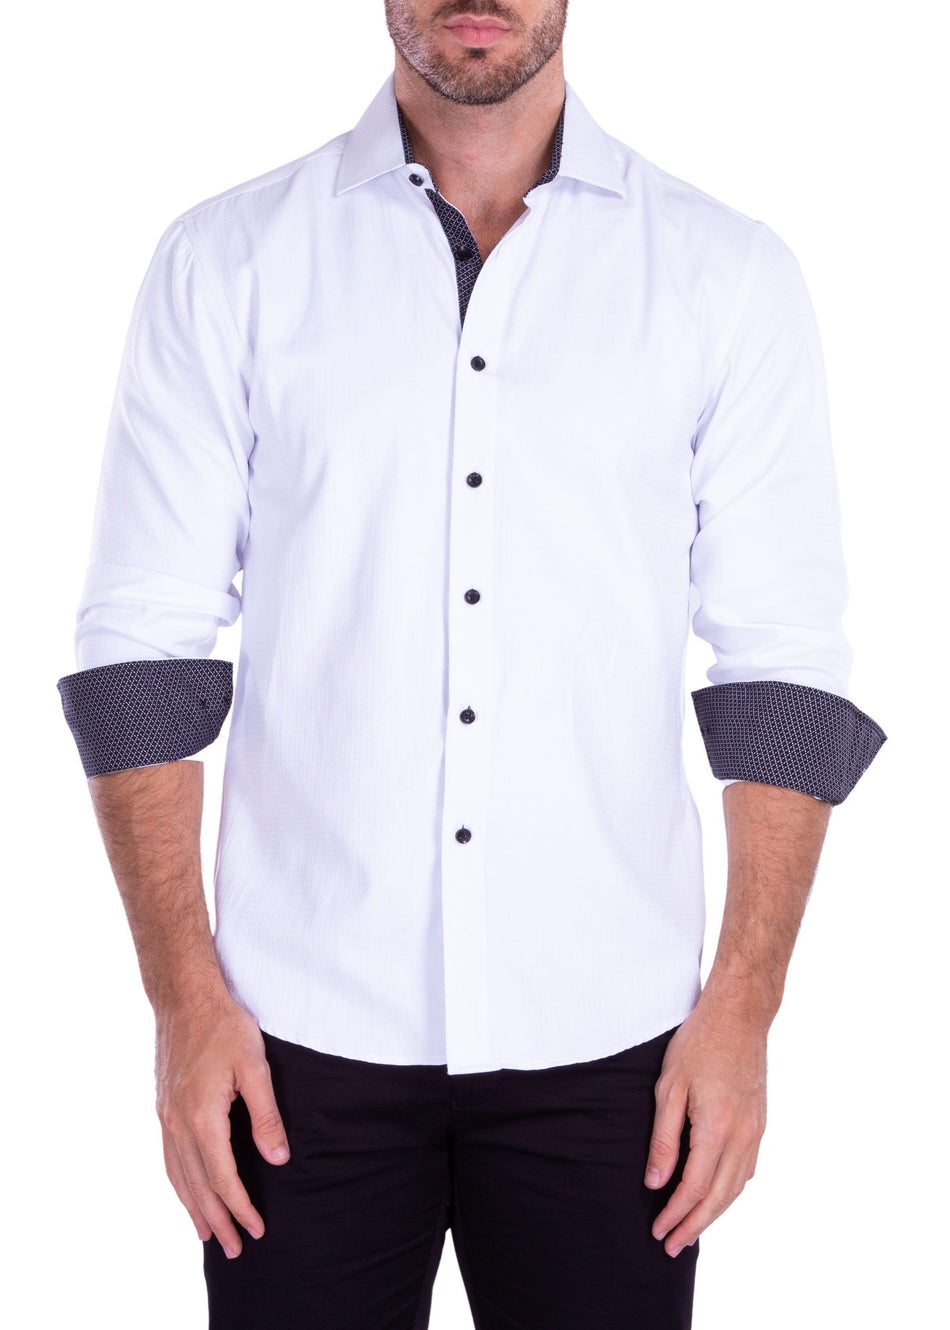 Square Microprint Long Sleeve Dress Shirt White